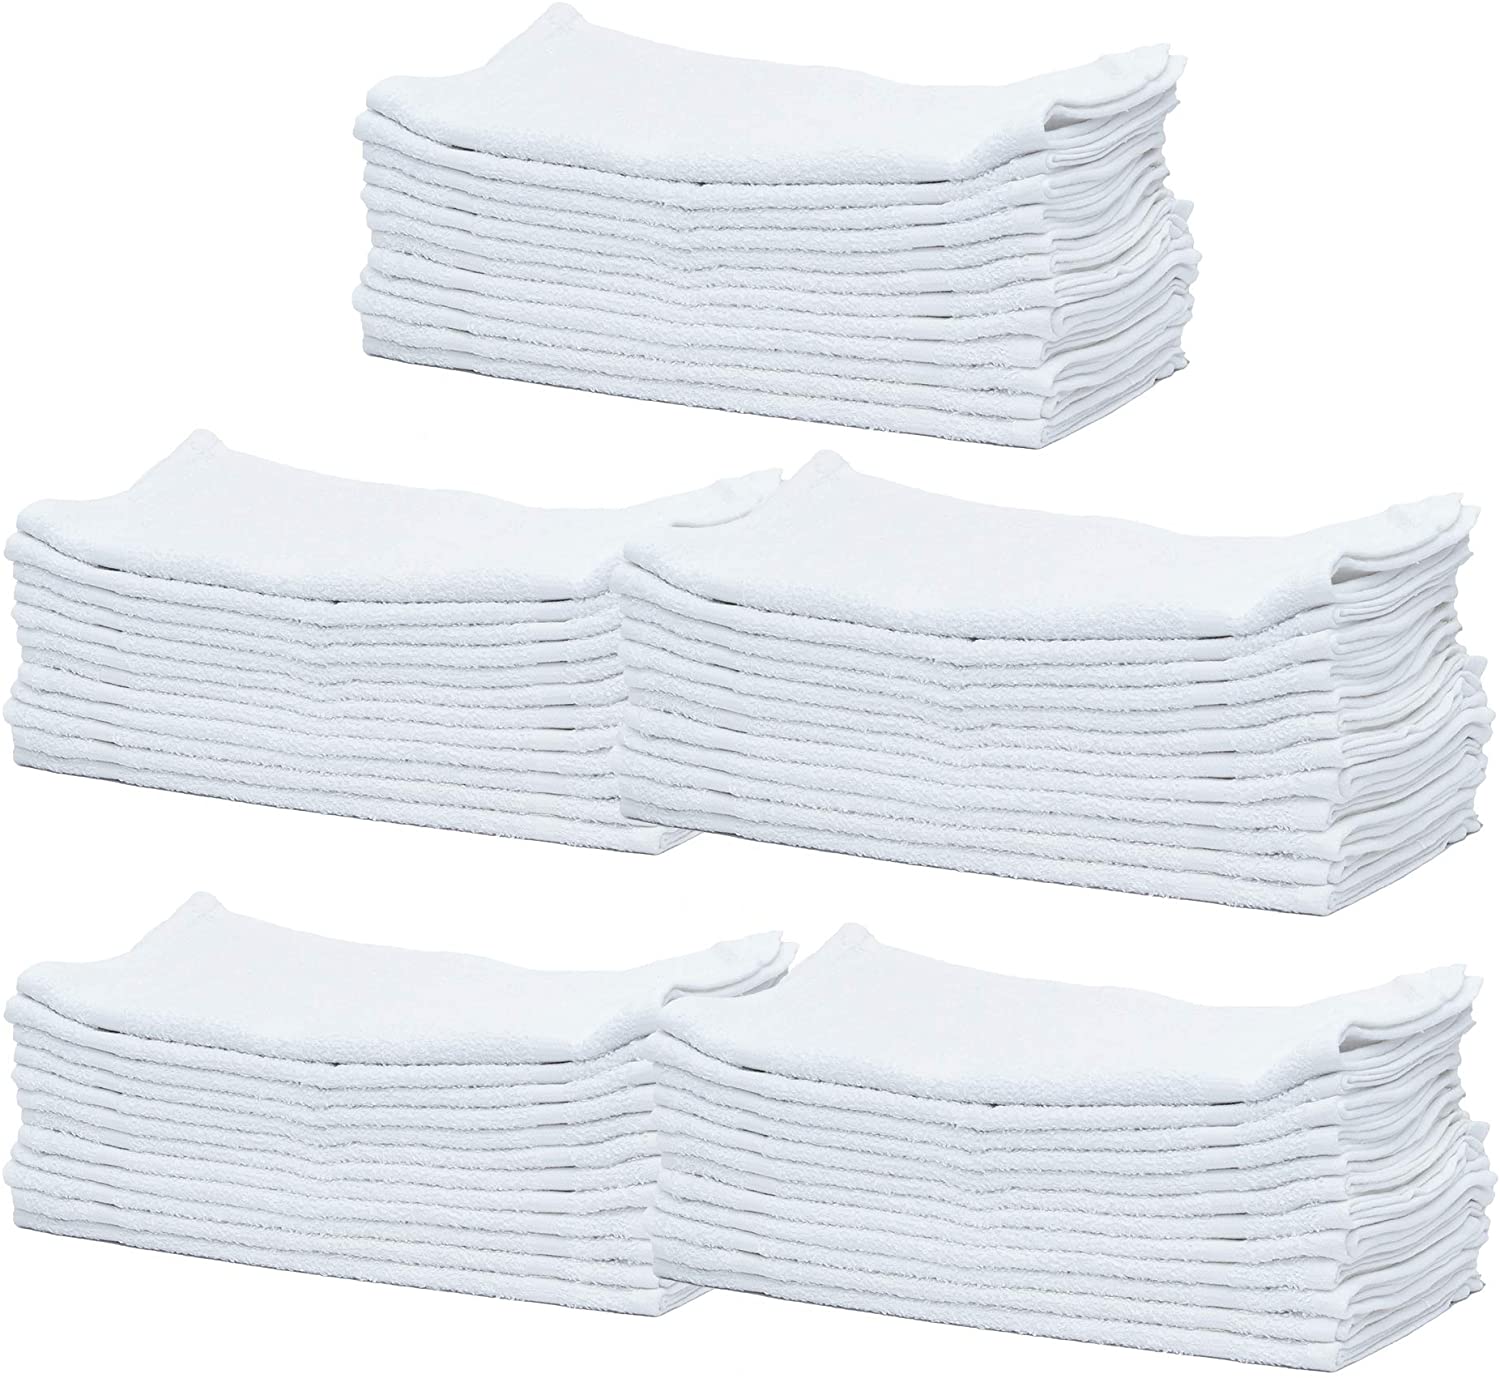 100% Cotton, Oxford White Classic Bath Towels Bulk -22x 44, 24x 50